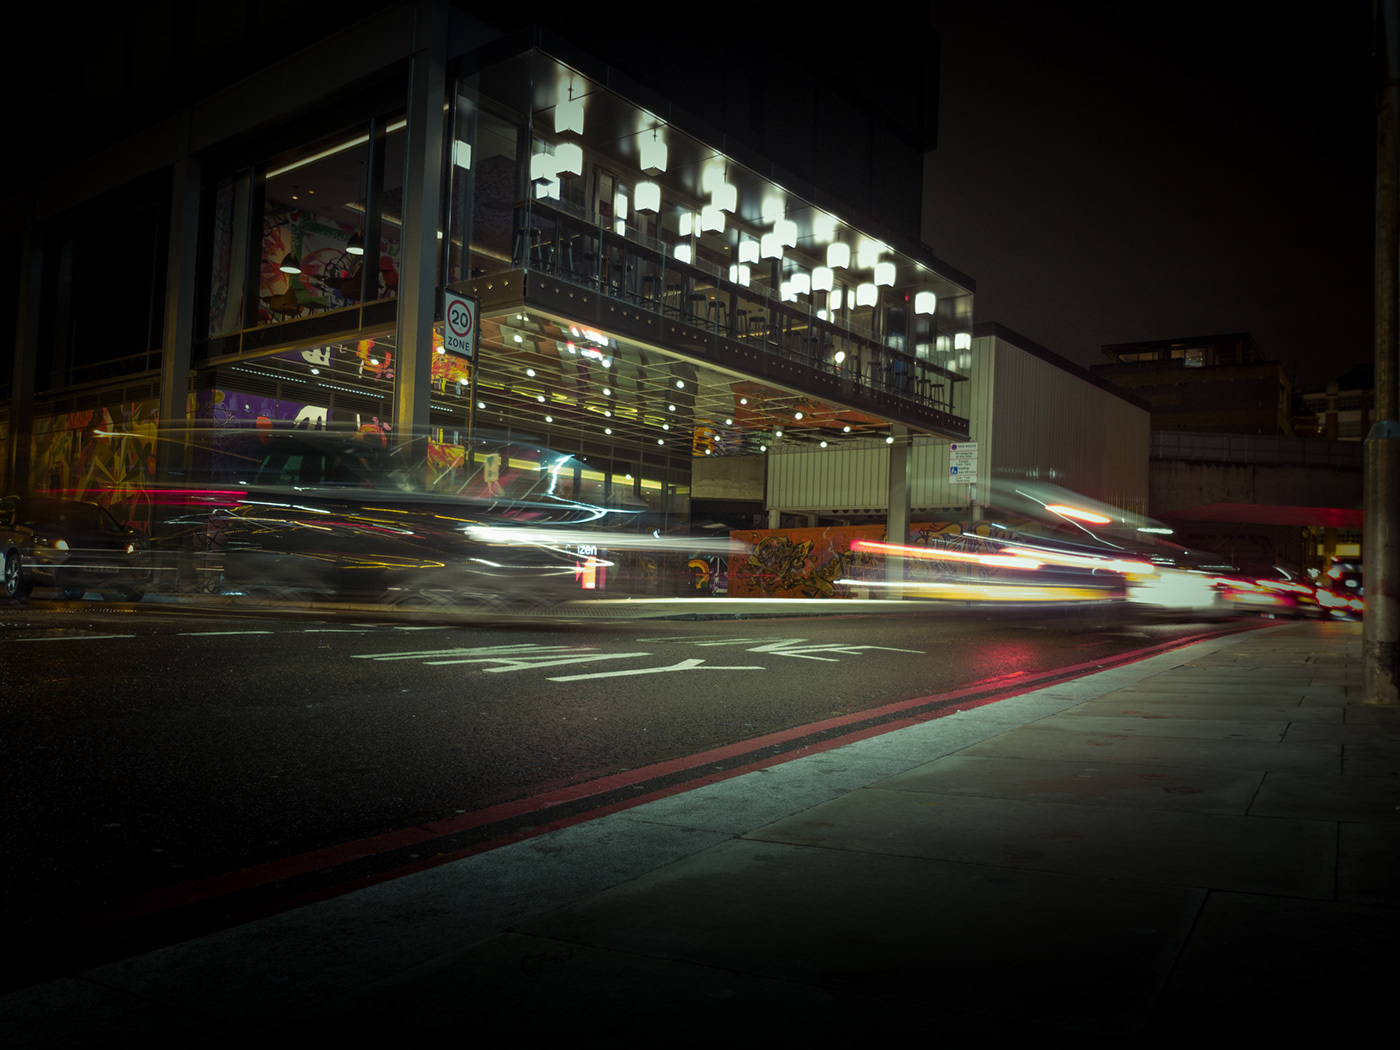 London shoreditch night photography long exposure long exposures